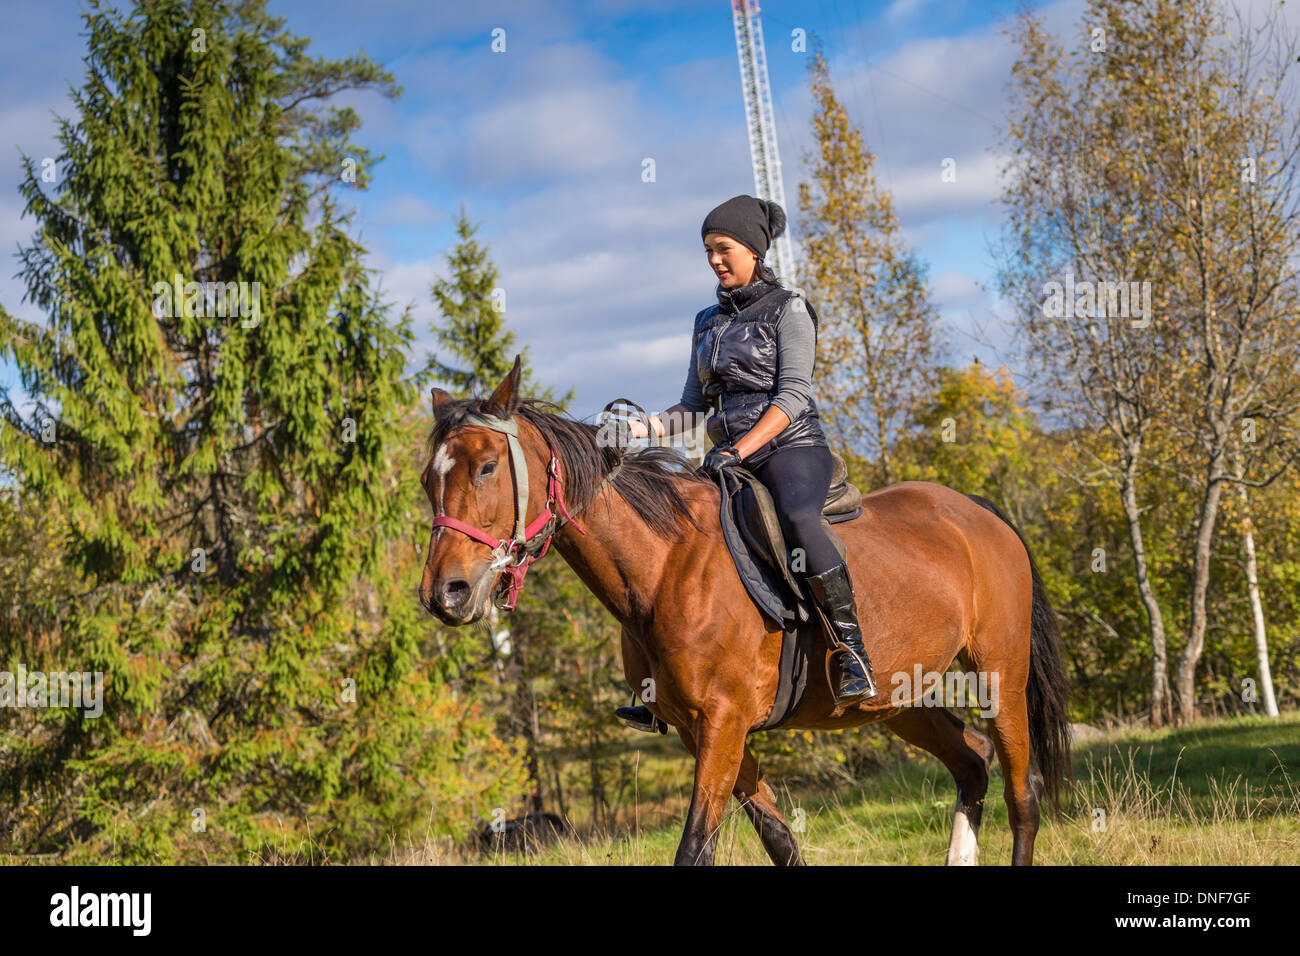 Elegant young woman riding horse Stock Photo